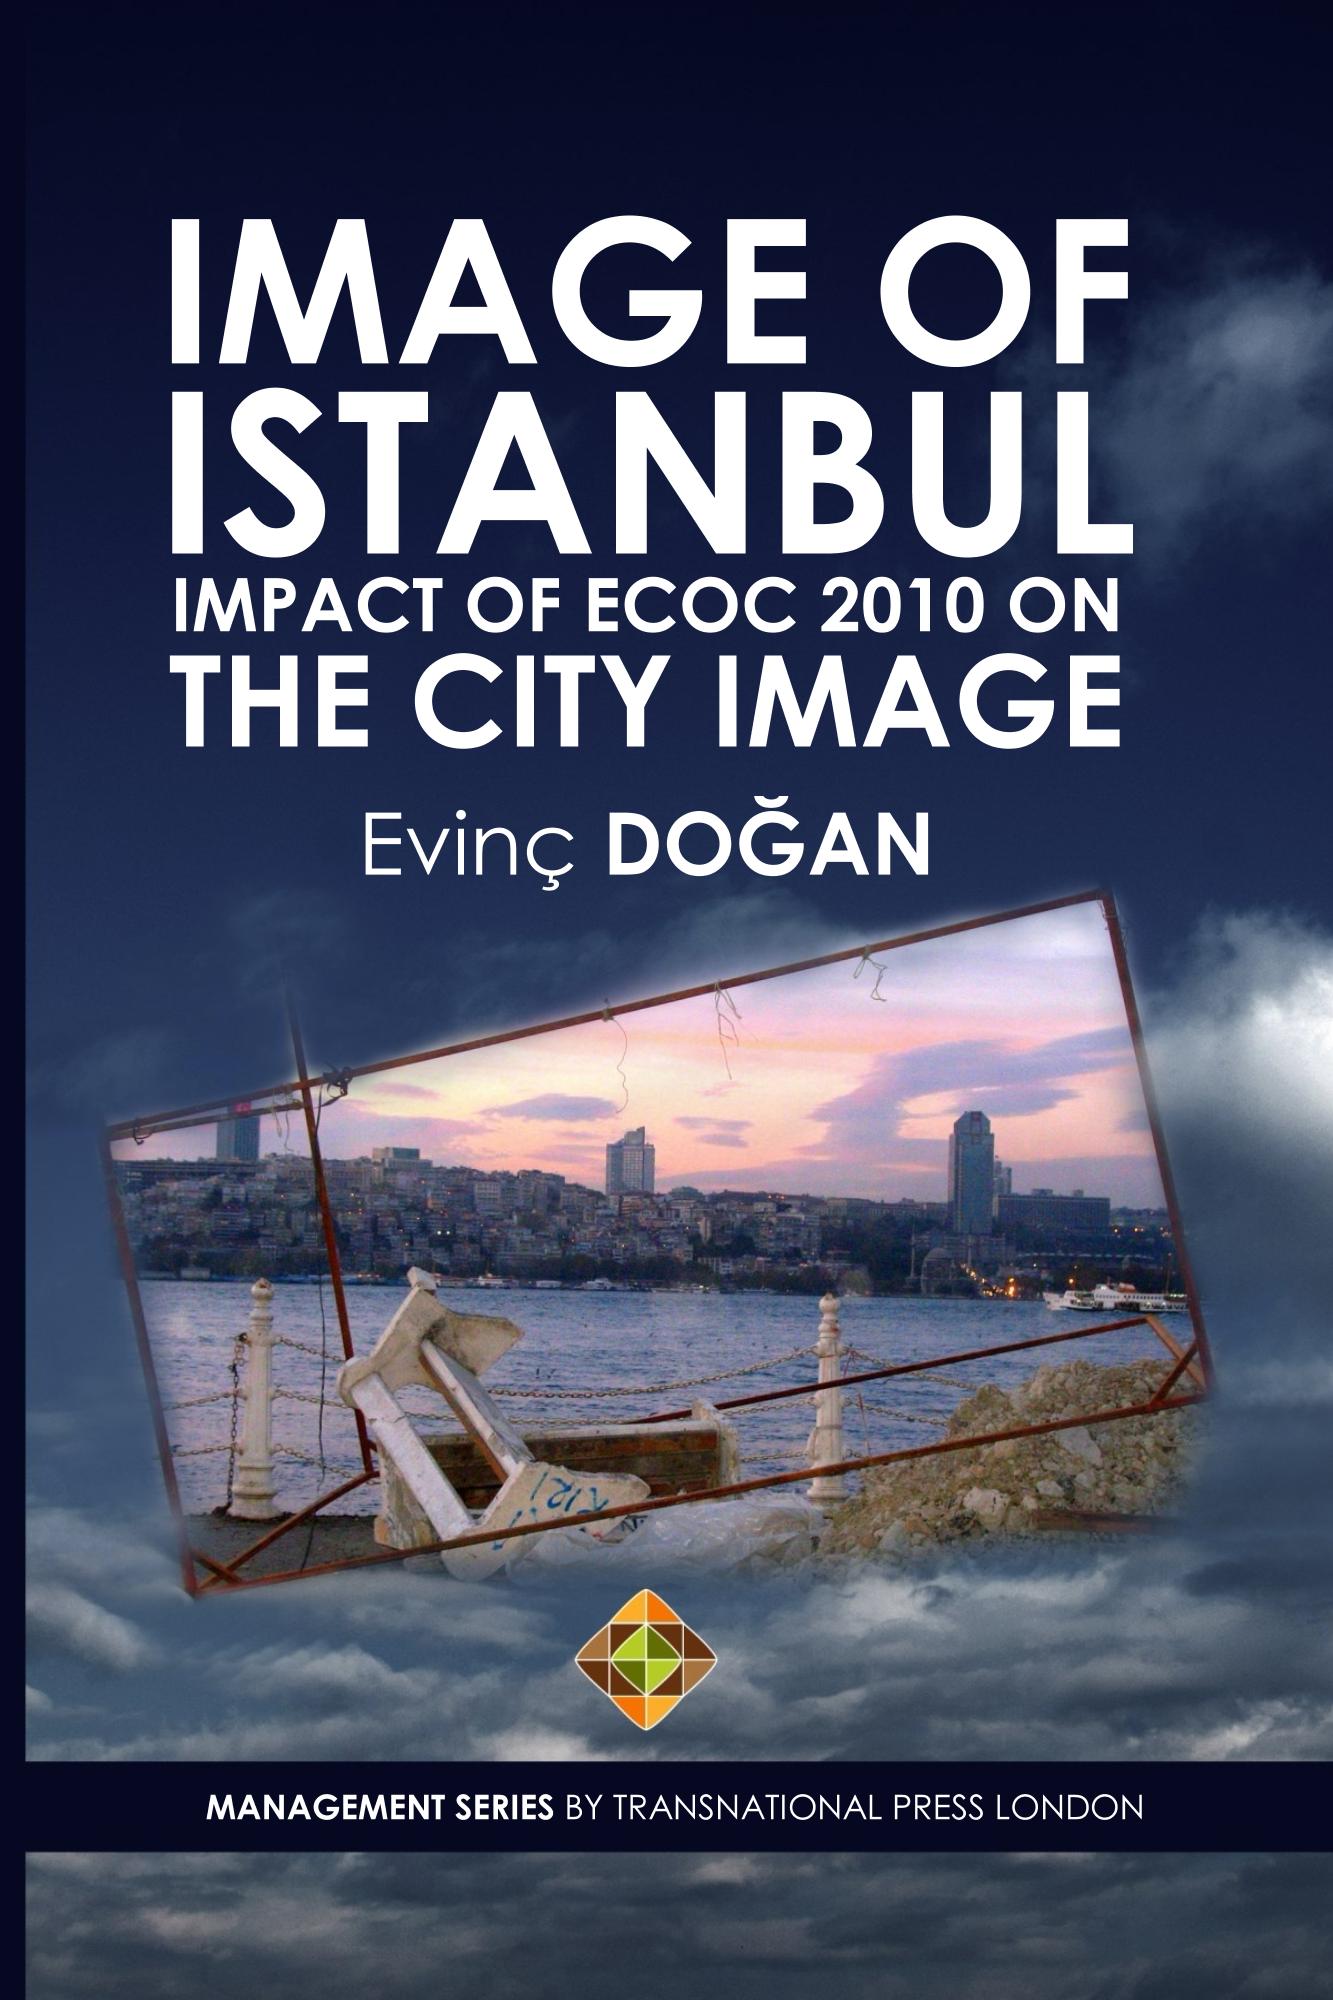 IMAGE OF ISTANBUL, IMPACT OF ECOC 2010 ON THE CITY IMAGE